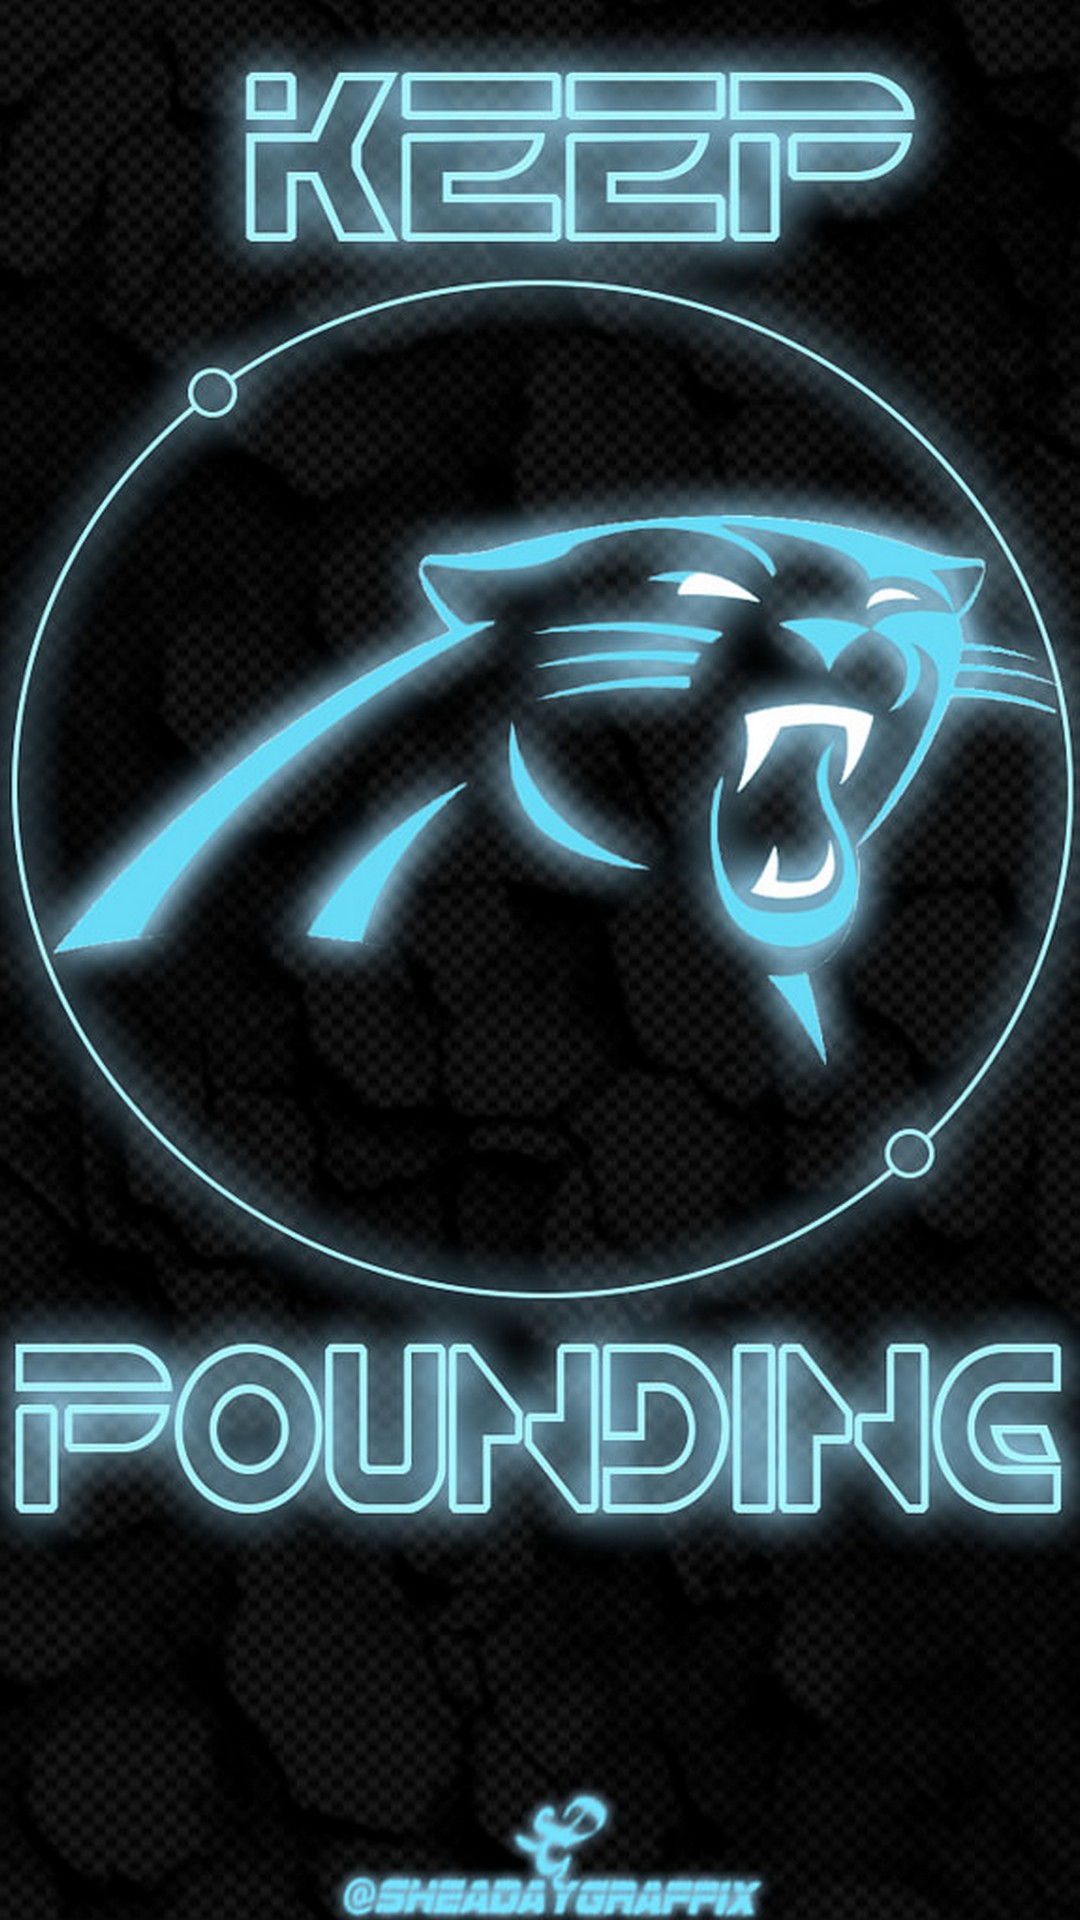 Carolina Panthers Iphone Home Screen Wallpaper With - Keep Pounding - HD Wallpaper 